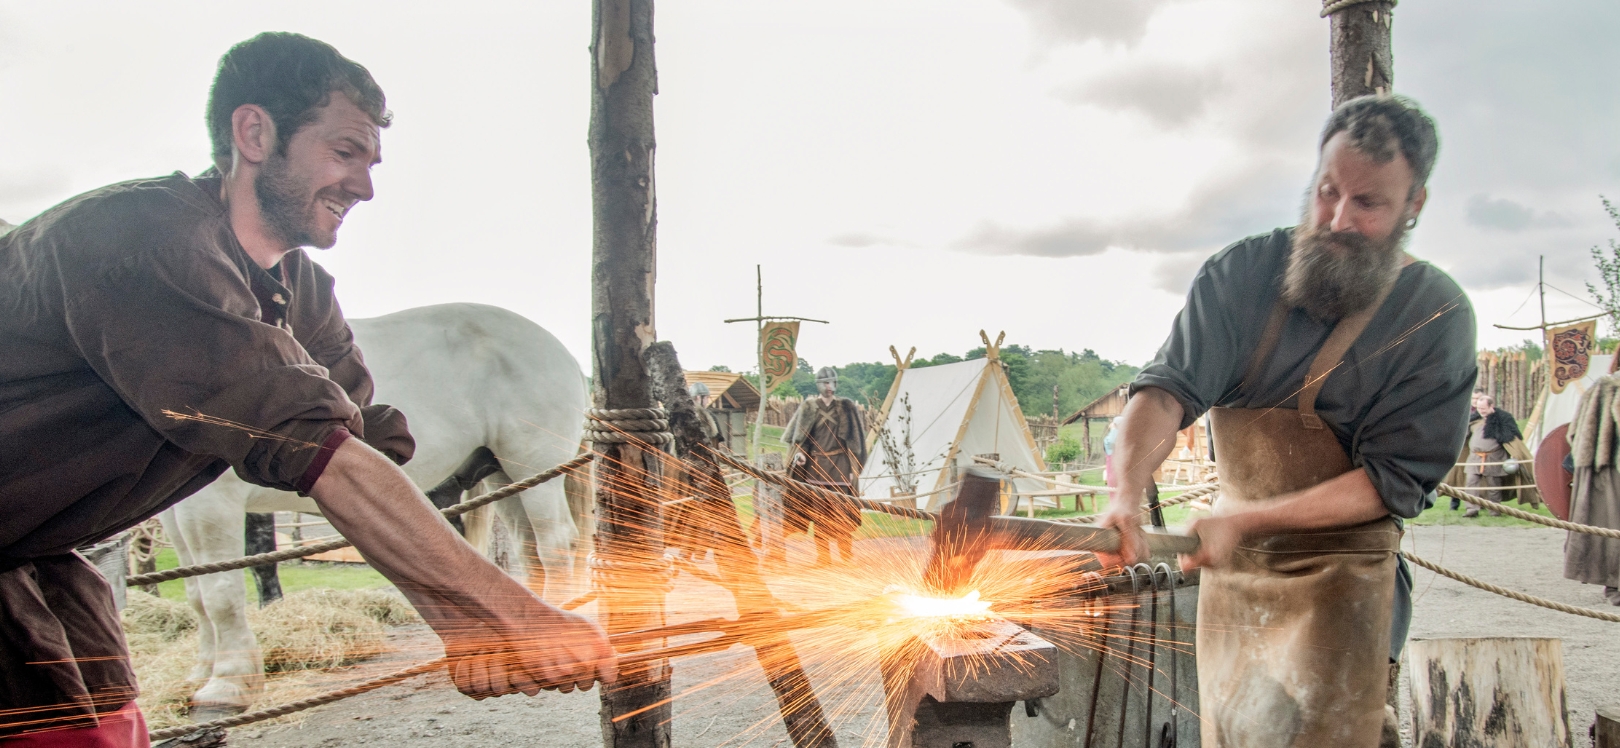 Blacksmiths forge in Viking Village at Kynren